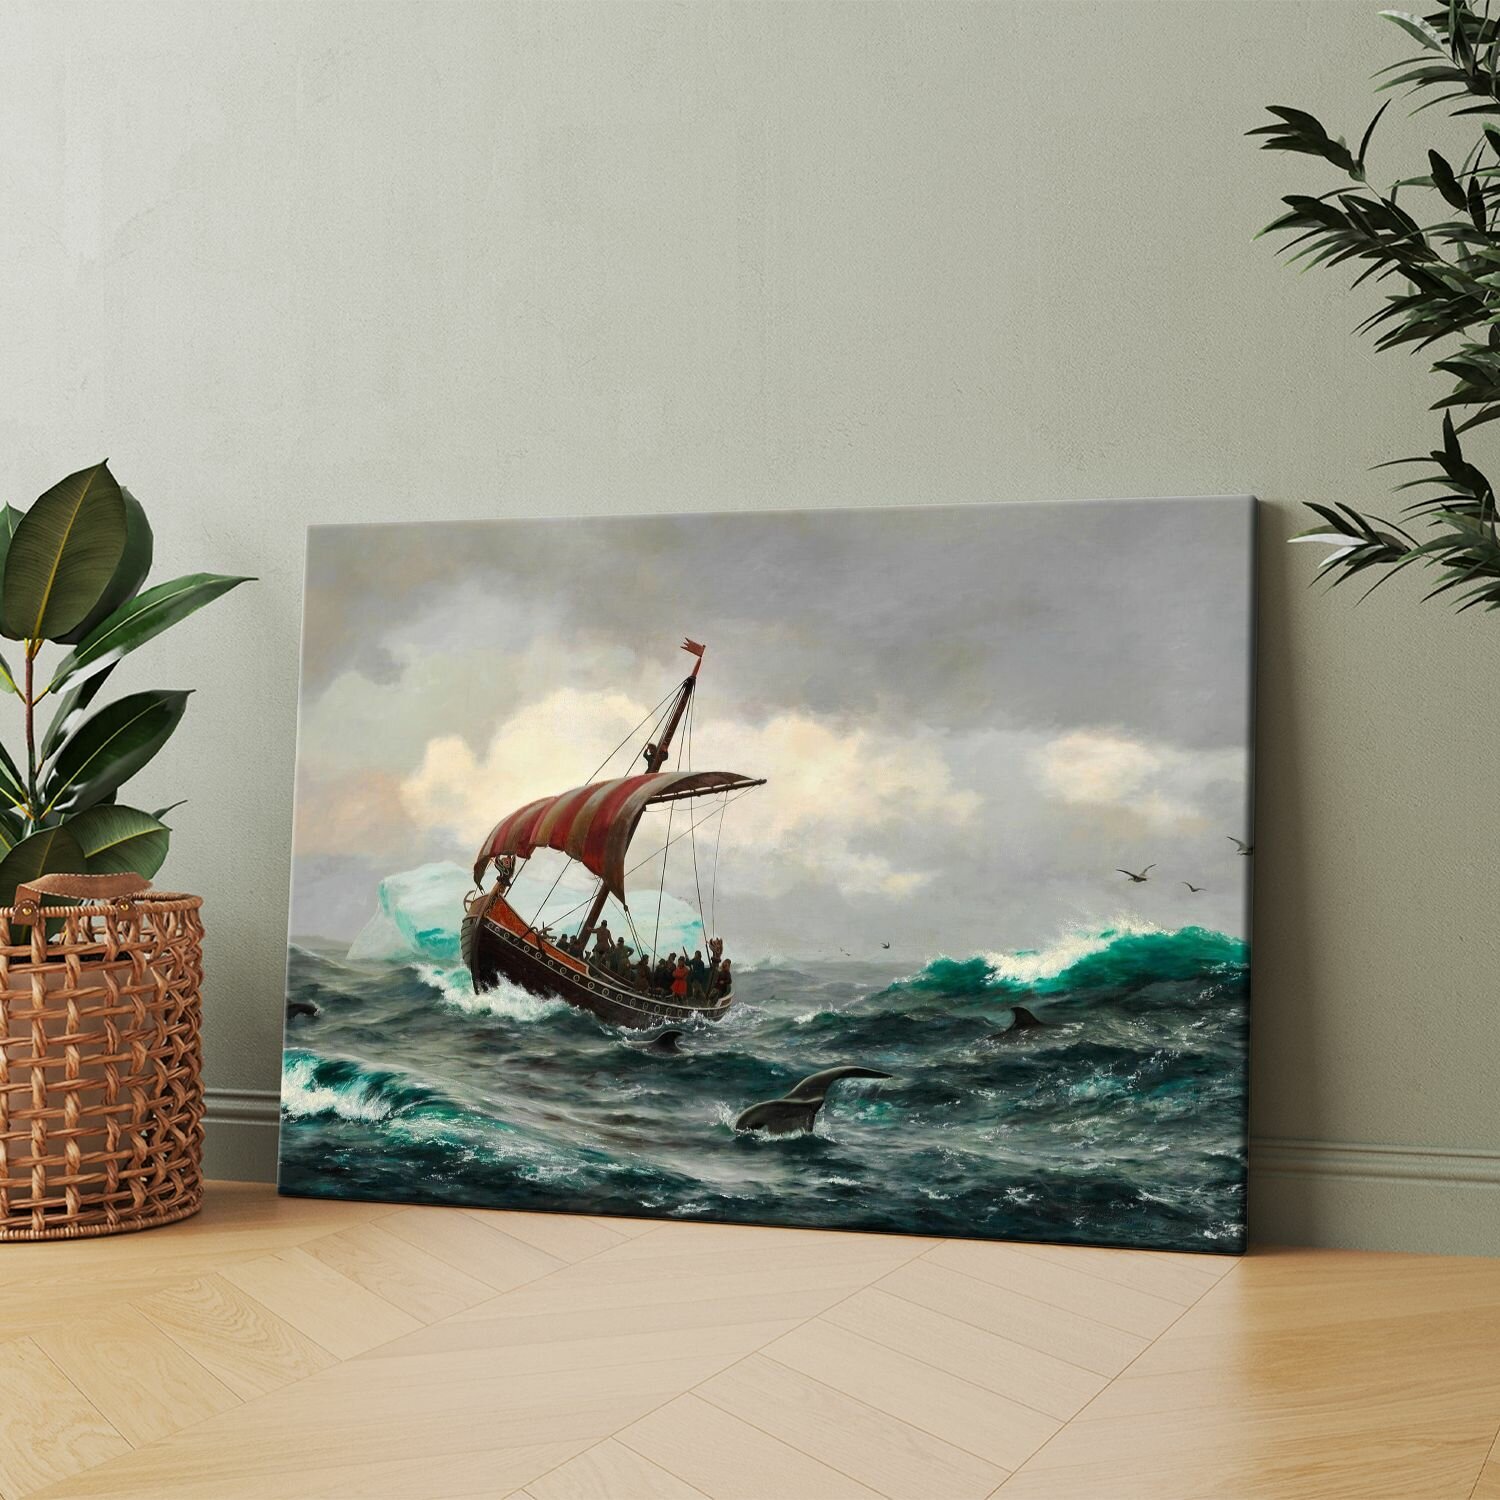 Картина на холсте (Картина лодки в бурном море) 30x40 см. Интерьерная, на стену.